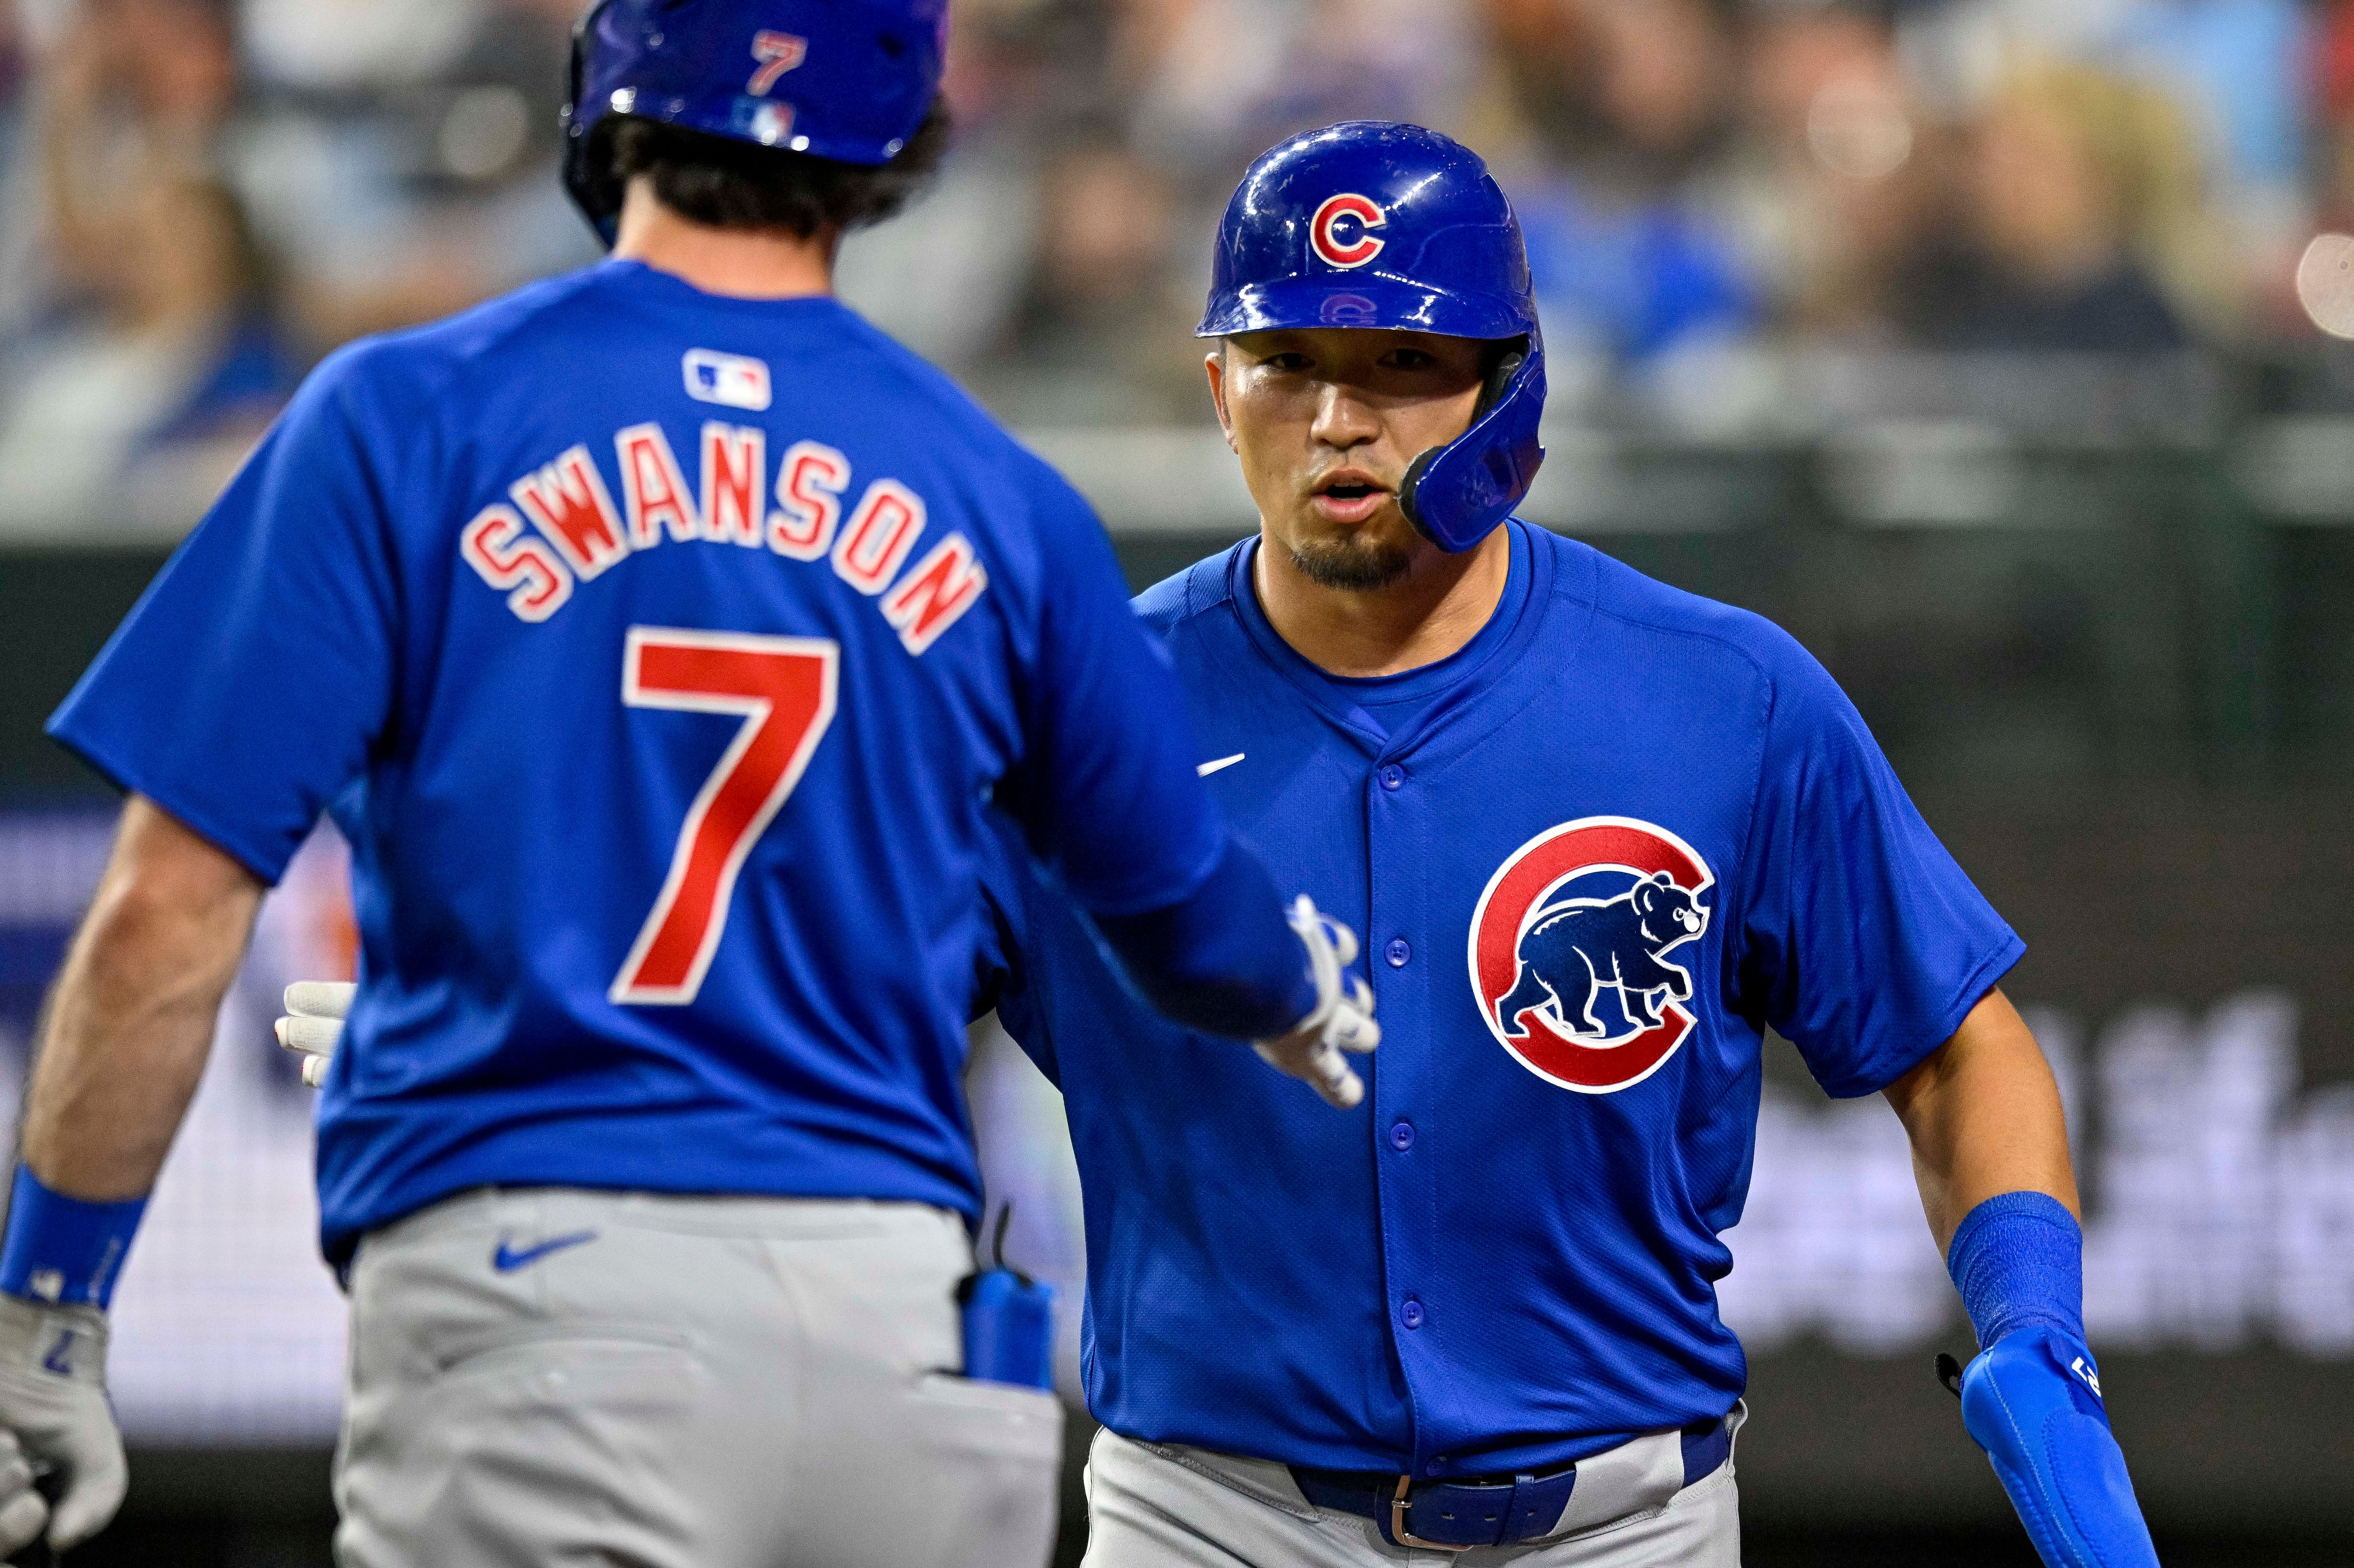 Chicago Cubs - Seiya Suzuki and Dansby Swanson